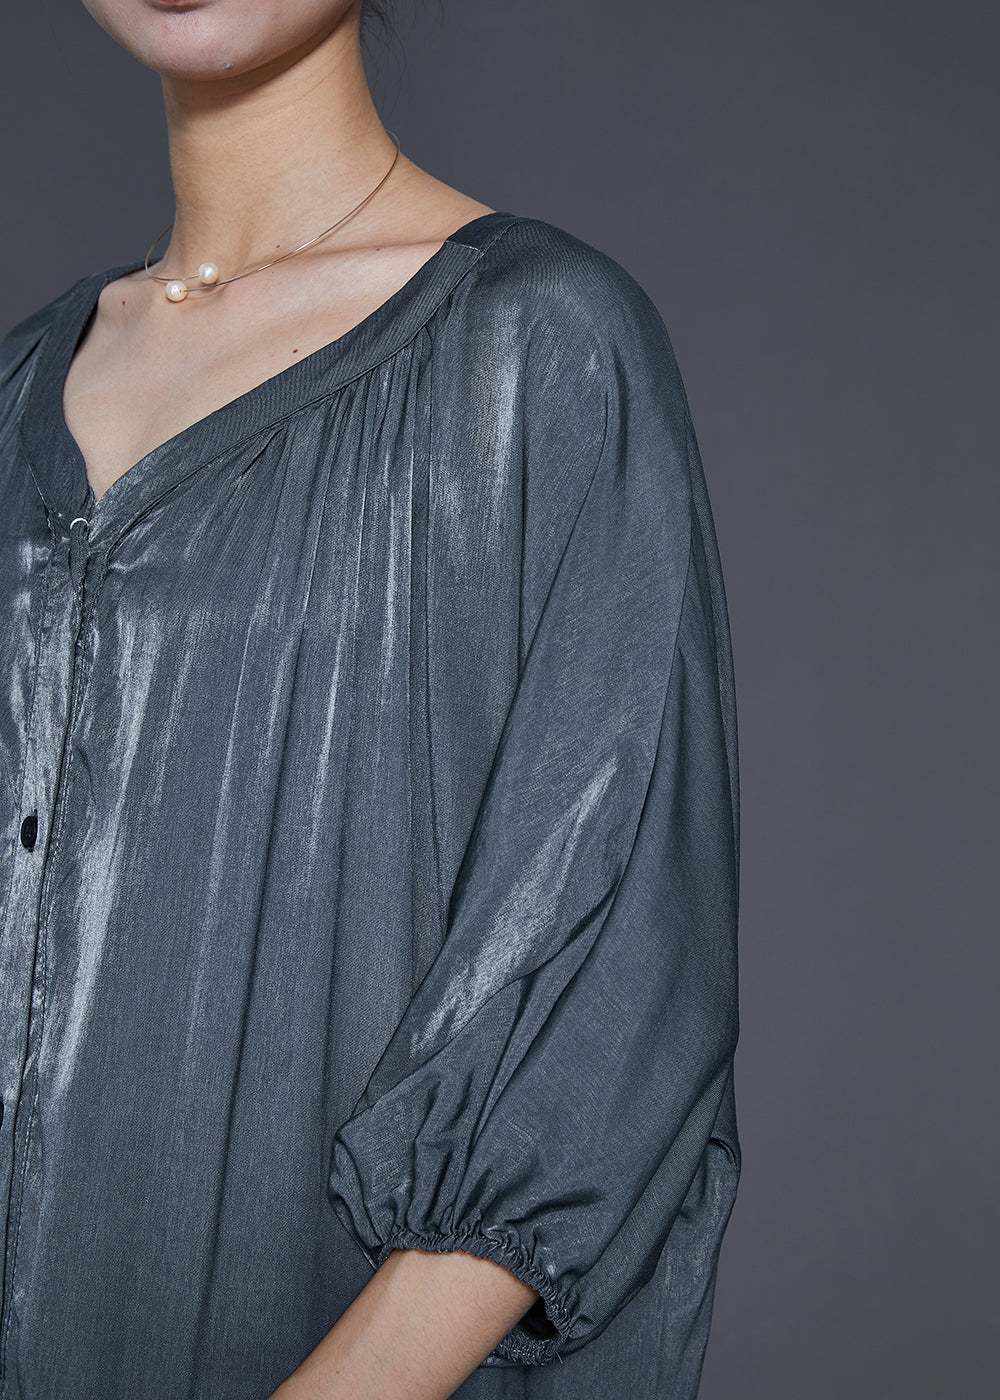 Italian Grey Oversized Linen Silk Long Dresses Summer